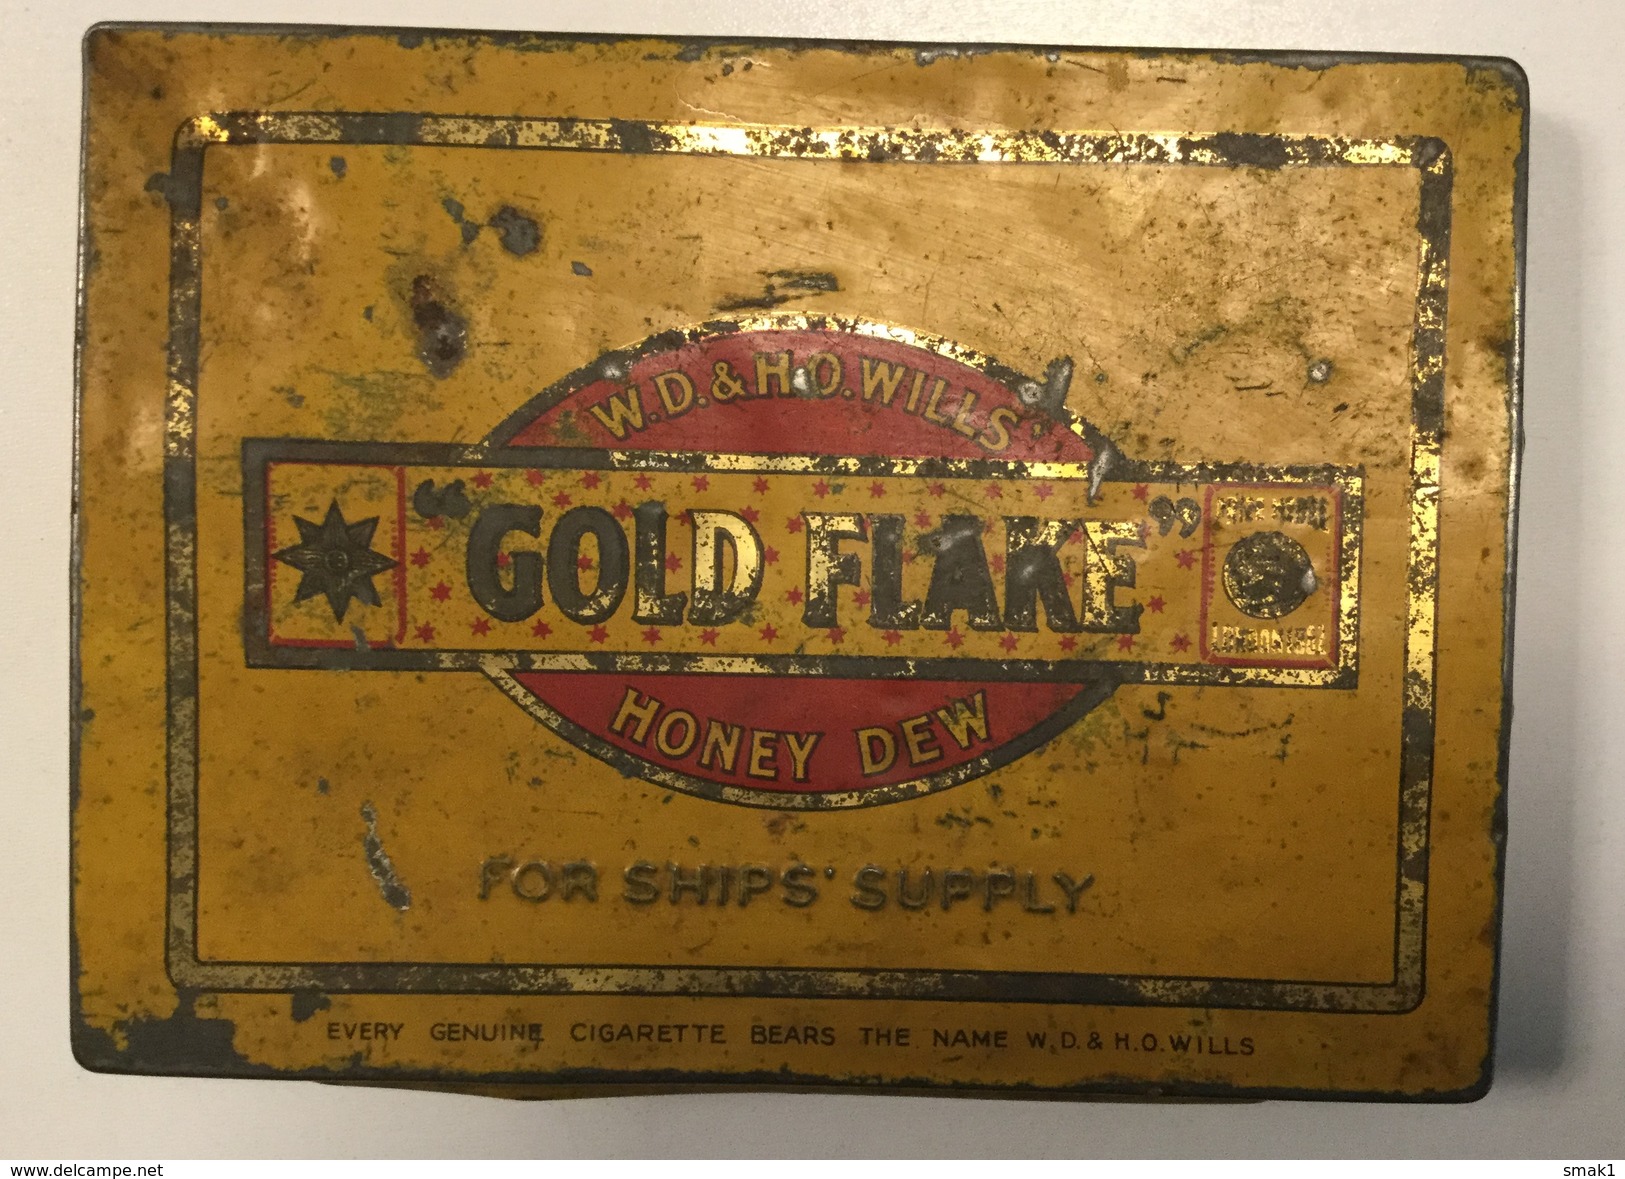 EMPTY  TOBACCO  BOX    TIN     GOLD FLAKE   W.D. & H.O. WILLS  HONEY DEW - Schnupftabakdosen (leer)